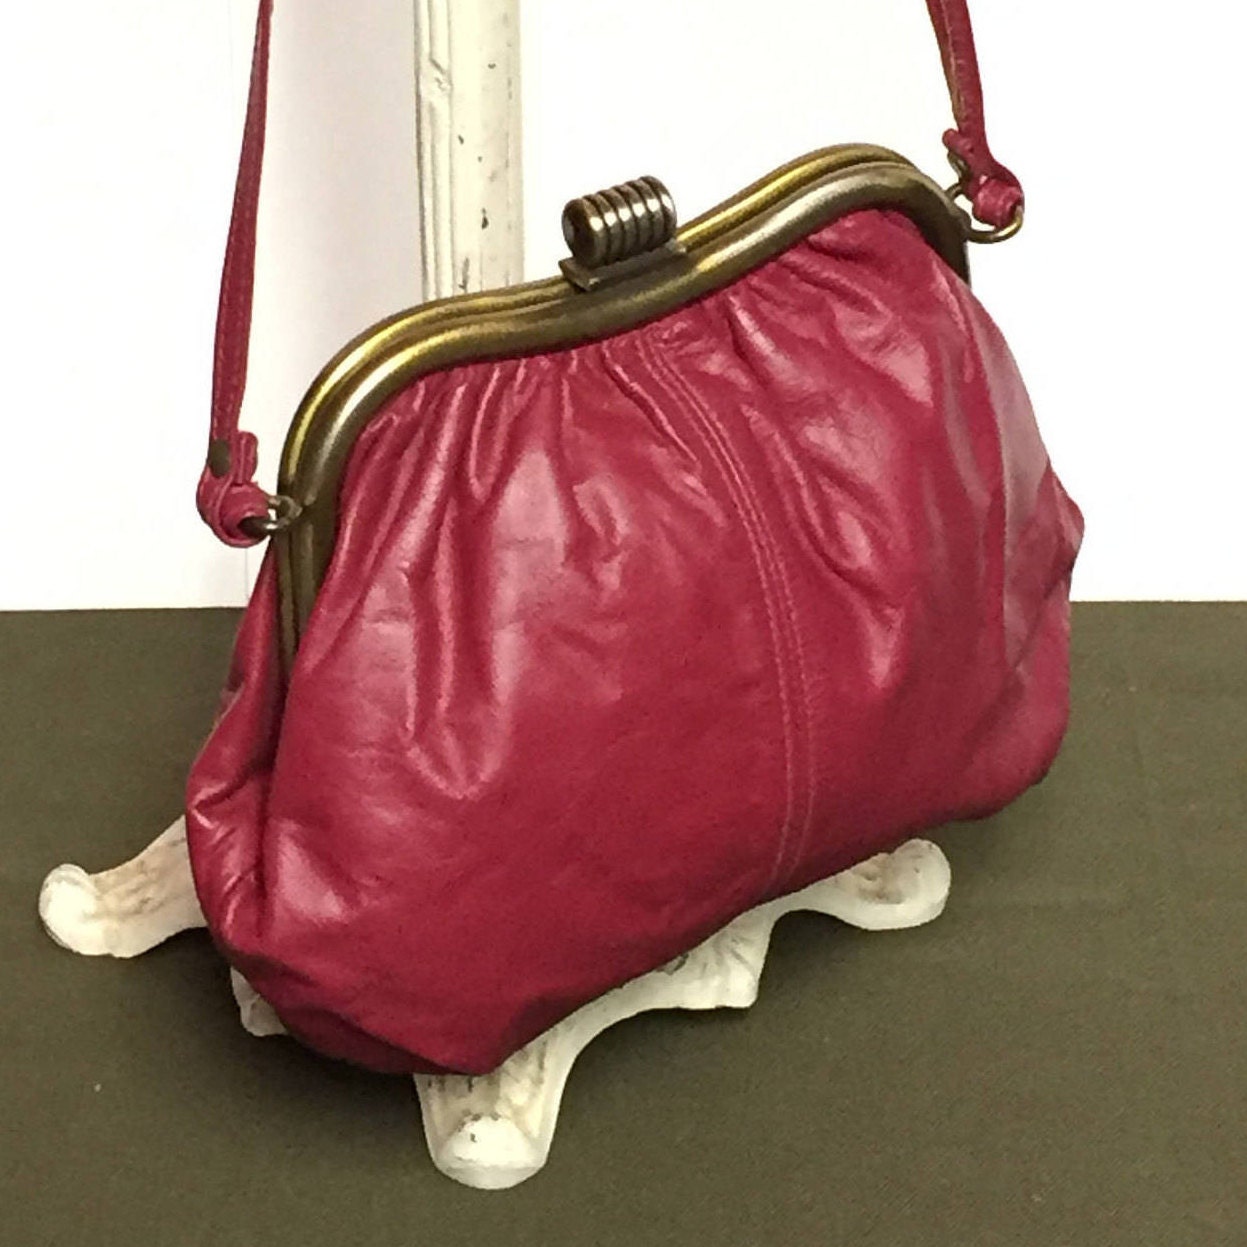 Vintage Red Leather Clutch Purse, Made in Haiti, Adjustable strap Handbag